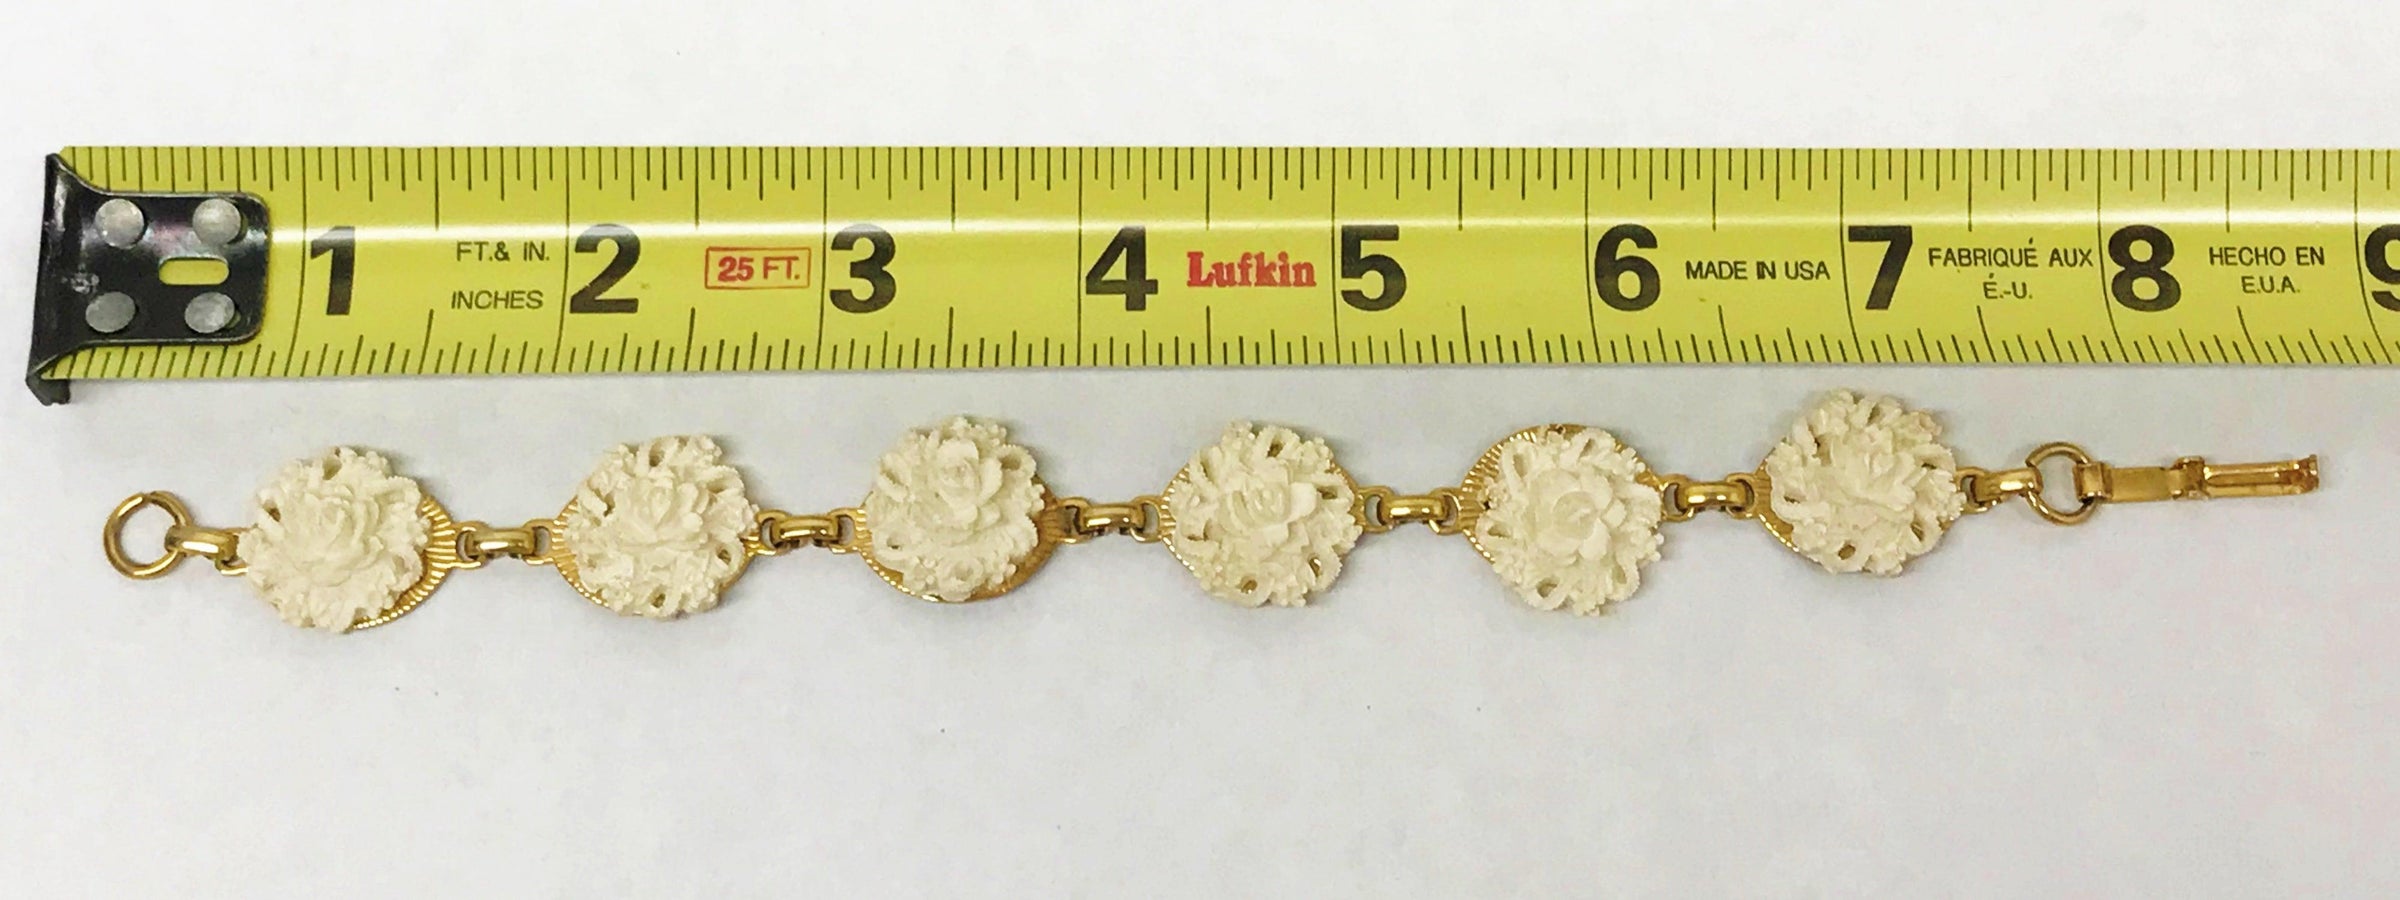 Vintage Gold Tone Carved Plastic Flower Link Bracelet - Hers and His Treasures